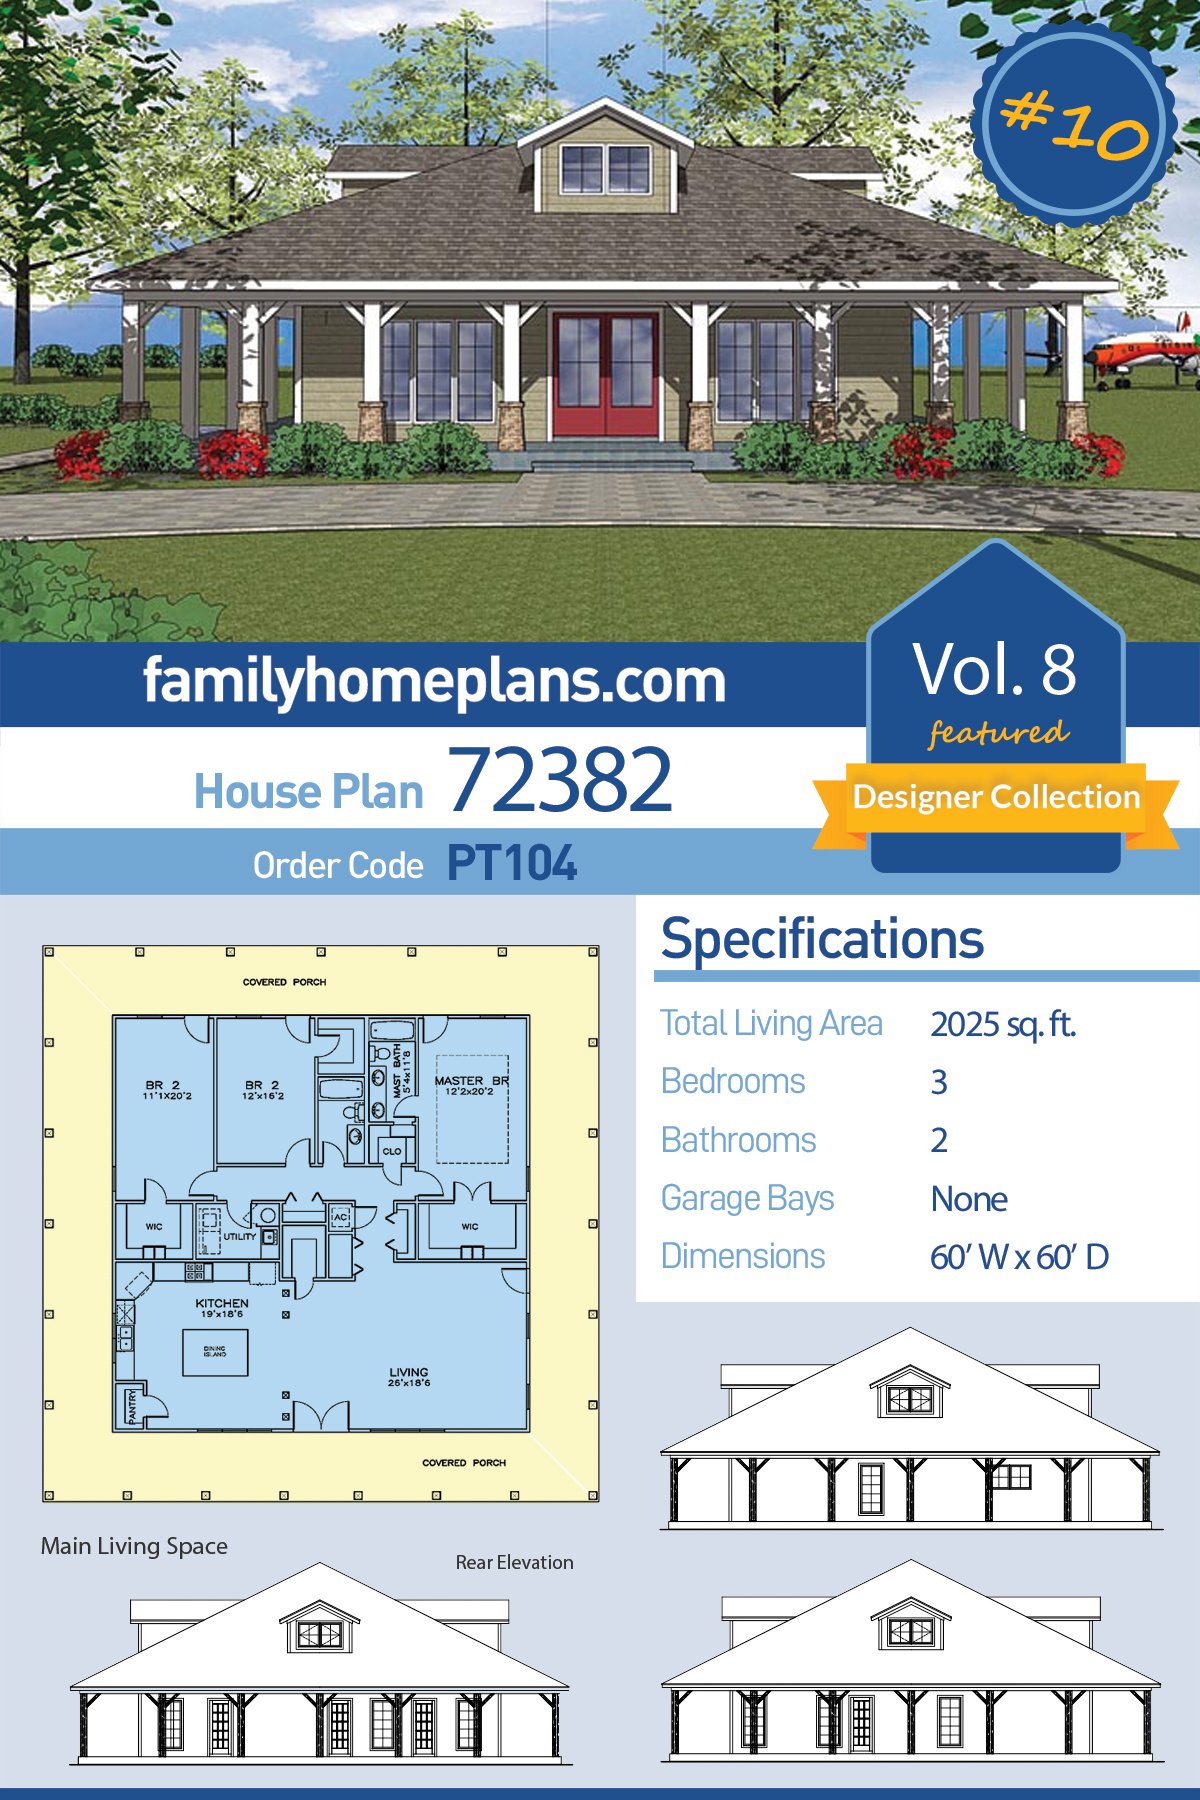 House Plan 72382